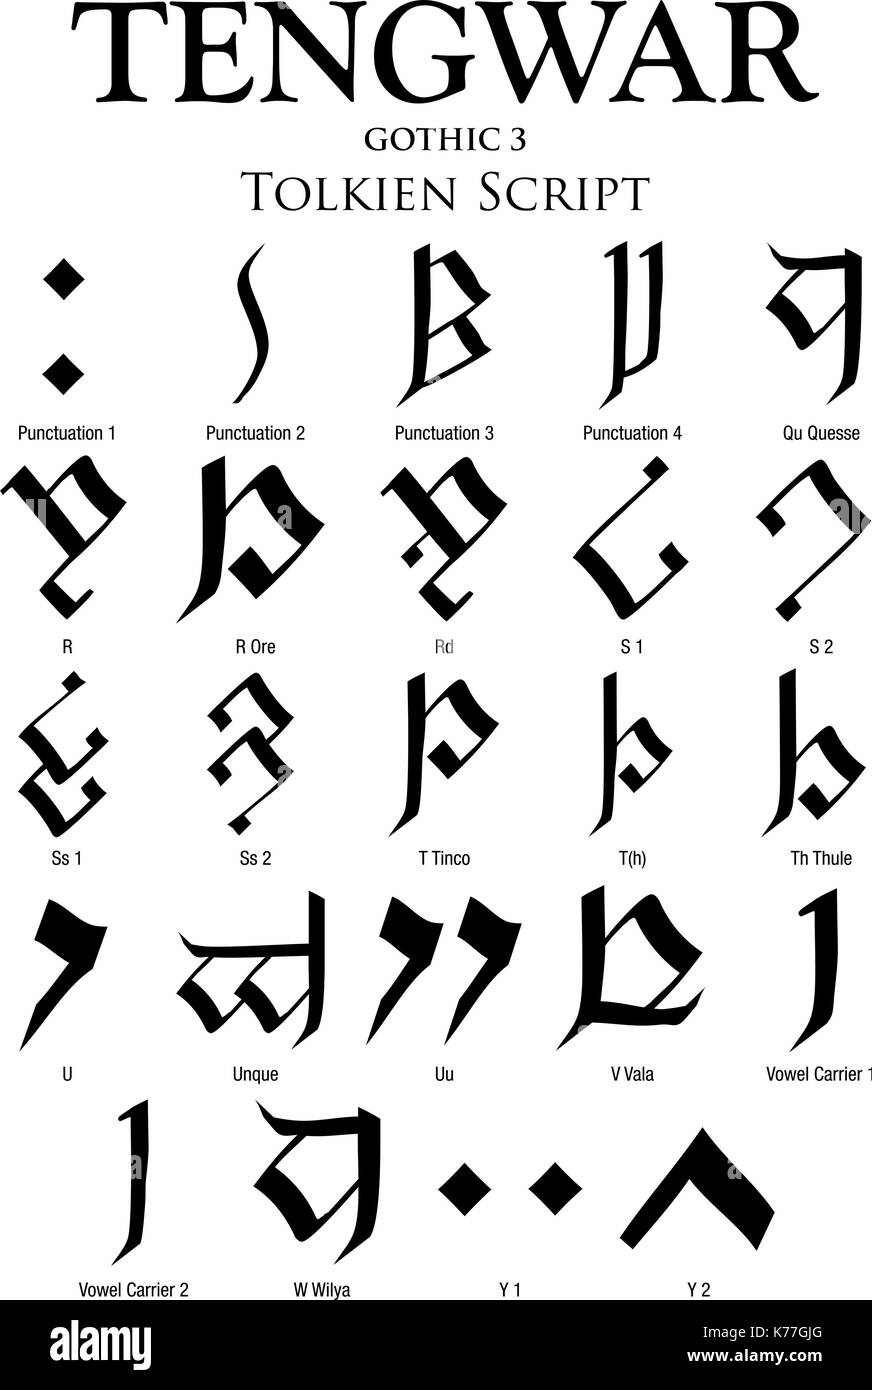 TENGWAR GOTHIC Alphabet  - Tolkien Script on white background - Vector Image Stock Vector